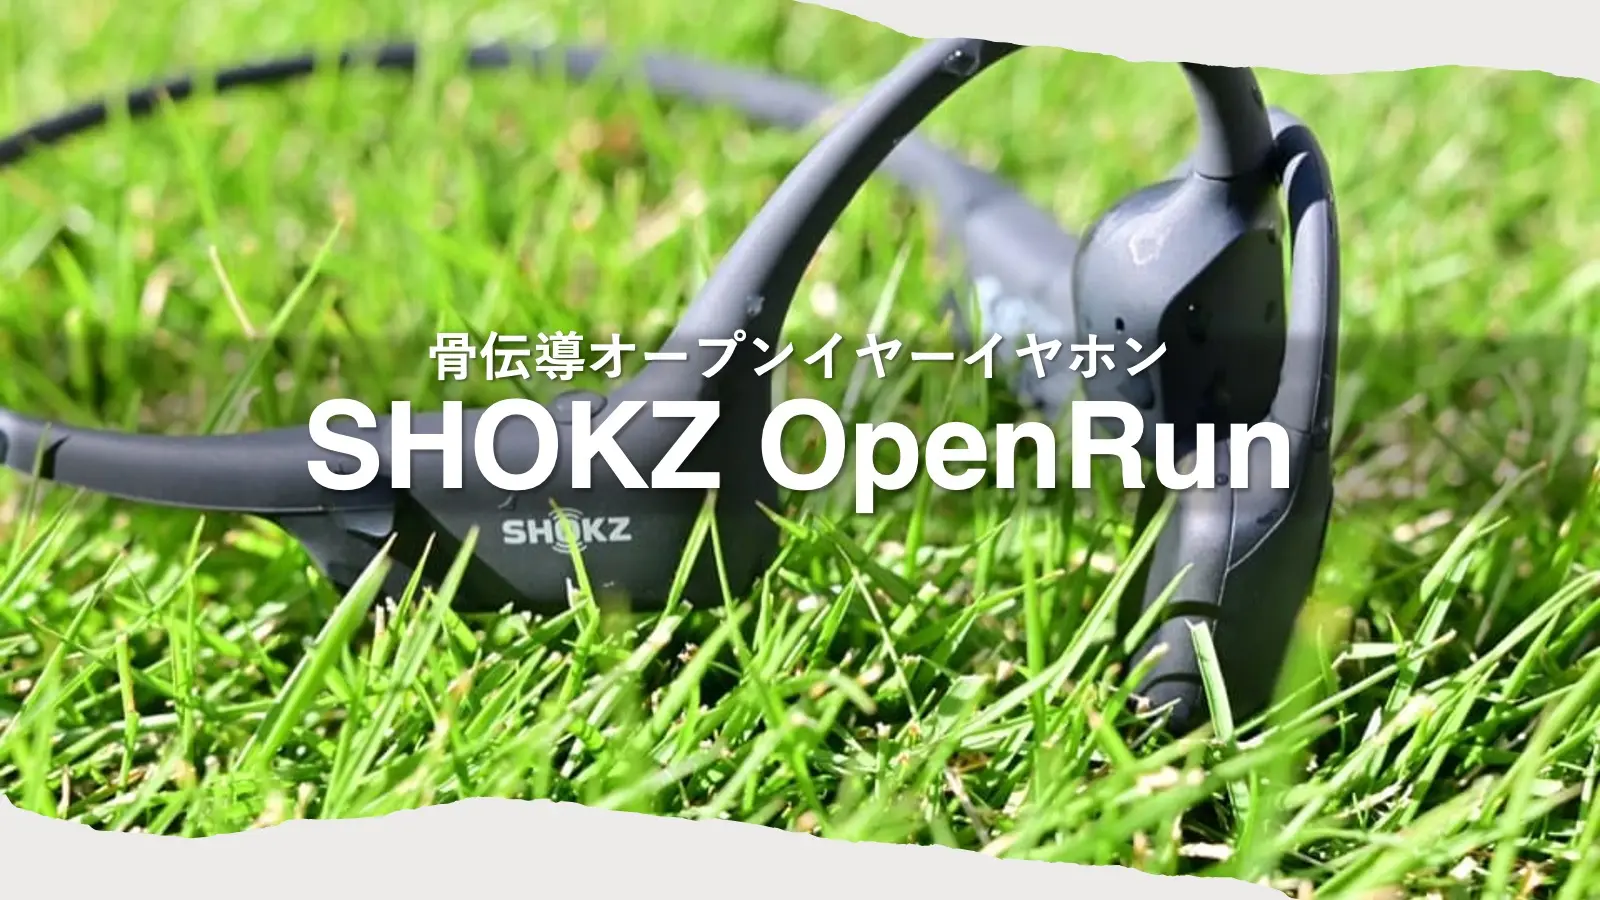 SHOKZ Open Run 骨伝導オープンイヤー・イヤホンのレビュー記事オリジナルアイキャッチ画像